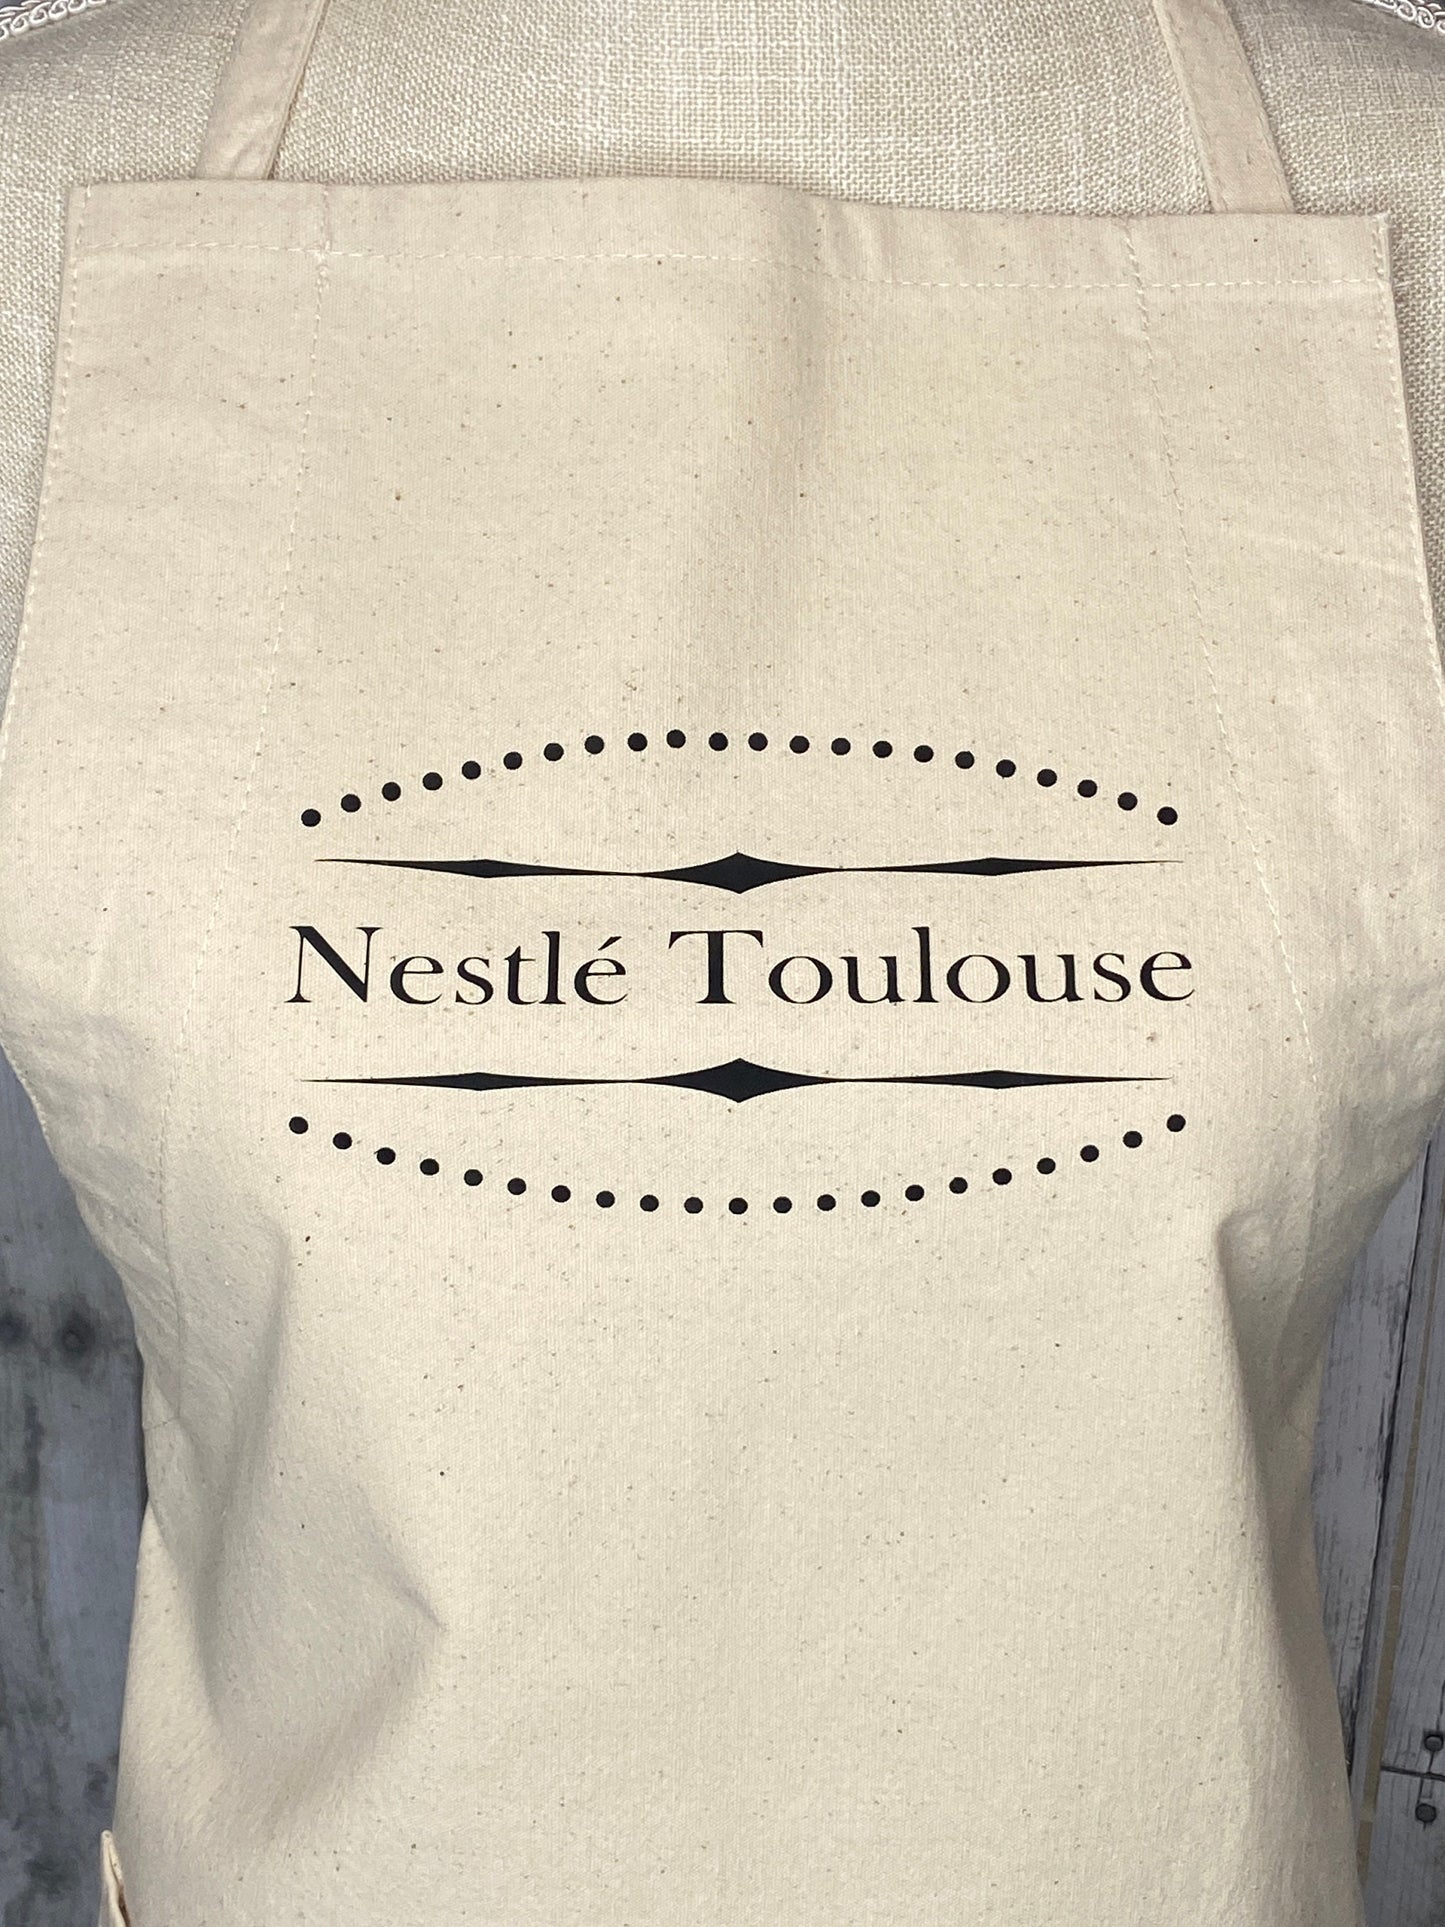 Friends Inspired Nestle Toulouse Apron - Binnie & Bopper Designs